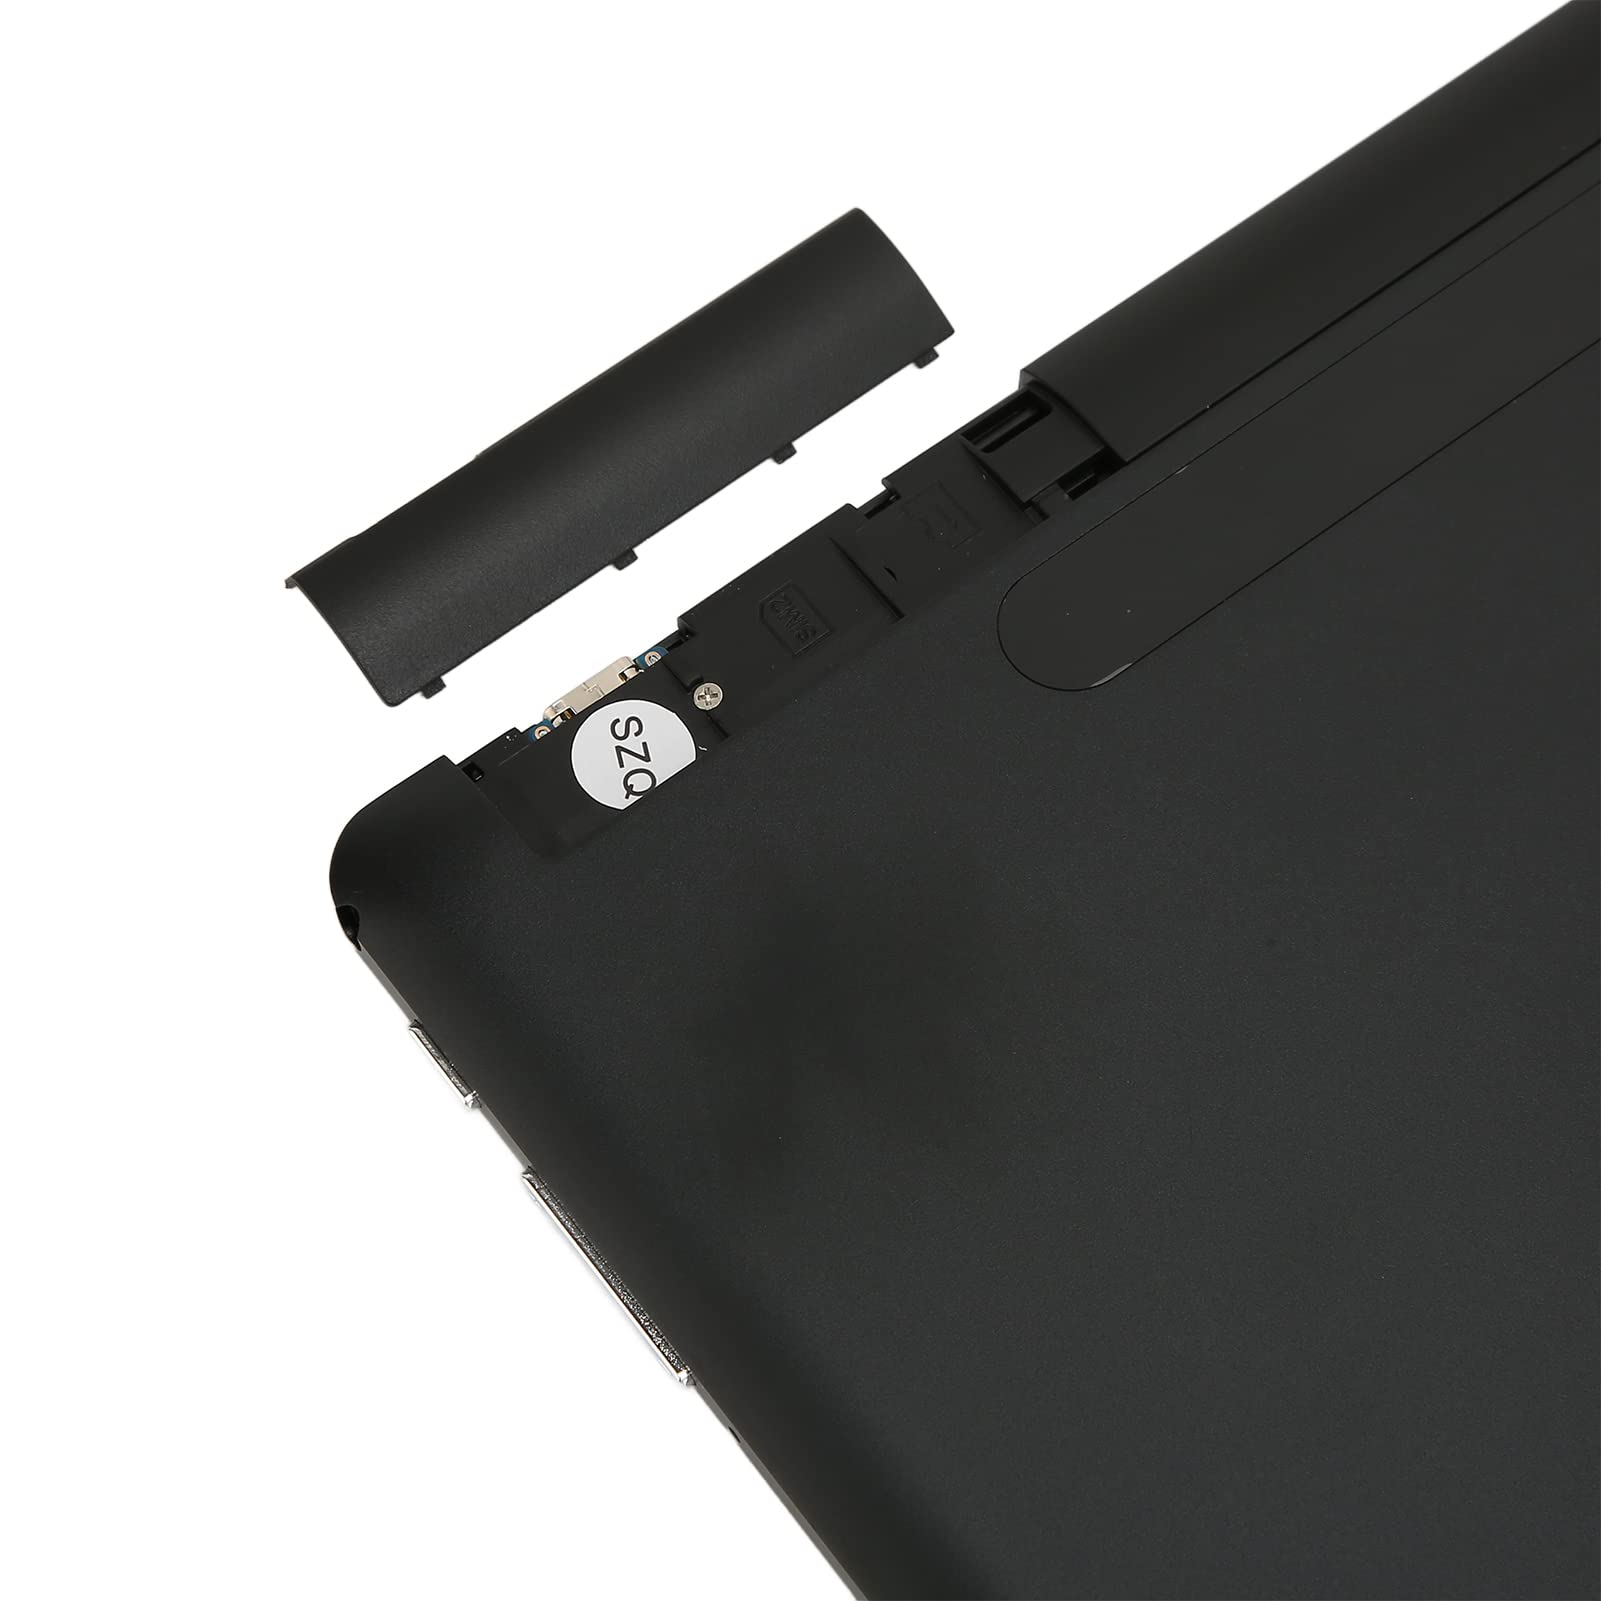 Tablet 10.1 Inch 10.1 Inch Tablet 6G RAM 128G ROM for Travel (Black)